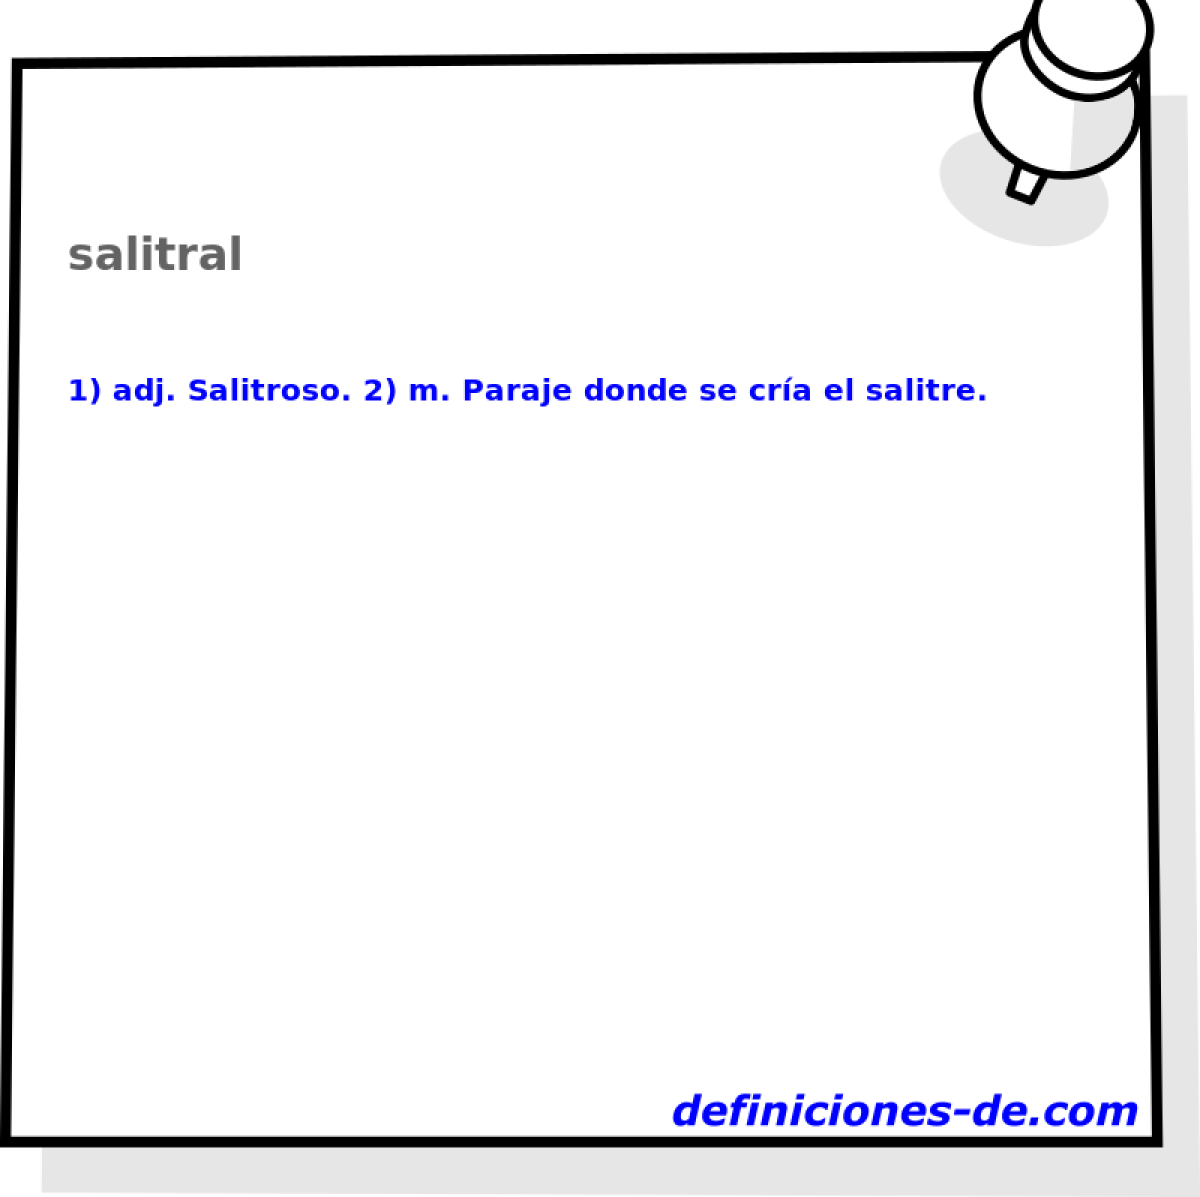 salitral 